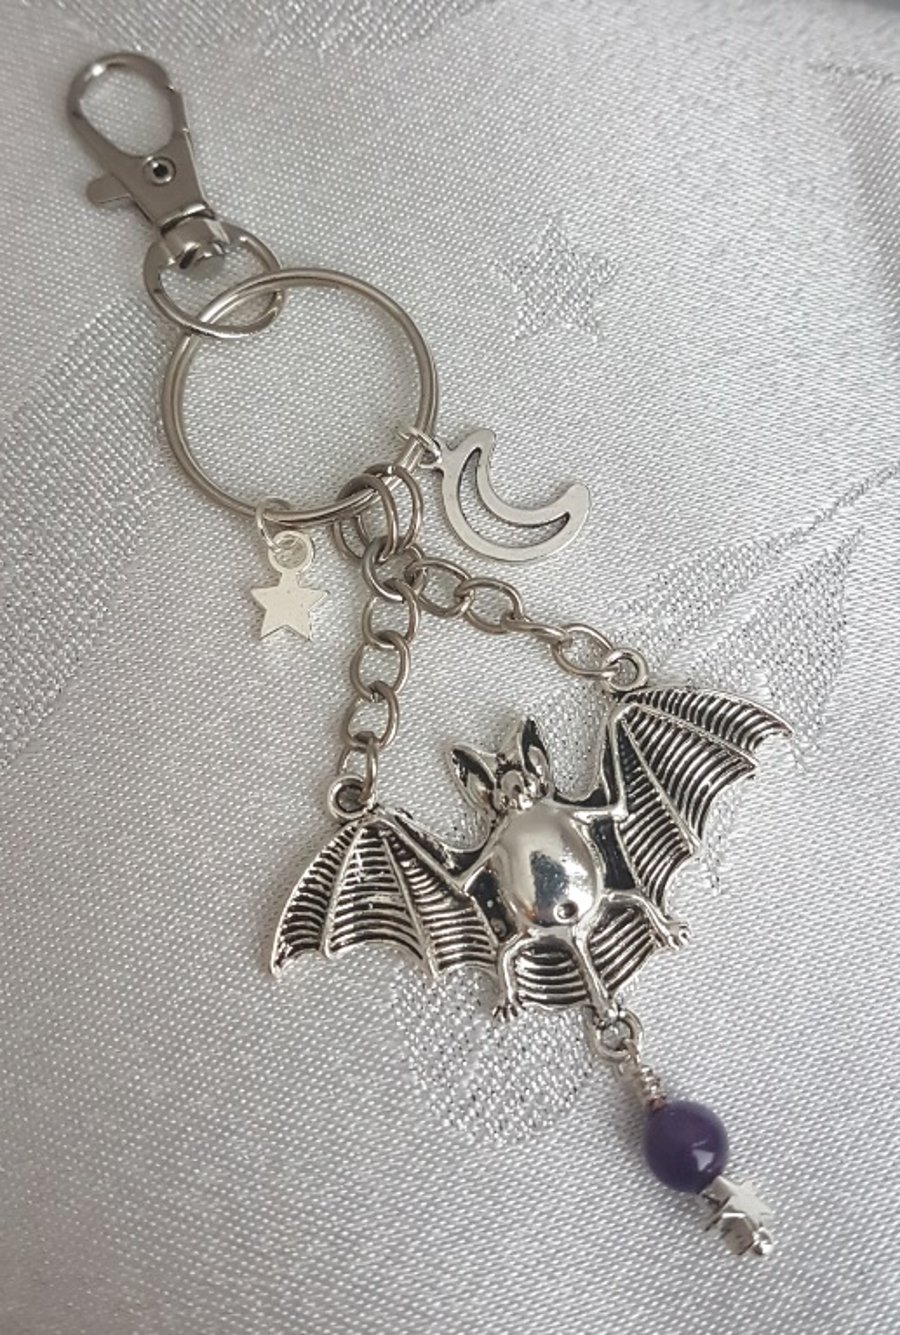 Gorgeous Large Bat Key Ring - Key Chain Bag Charm - Silver Tones